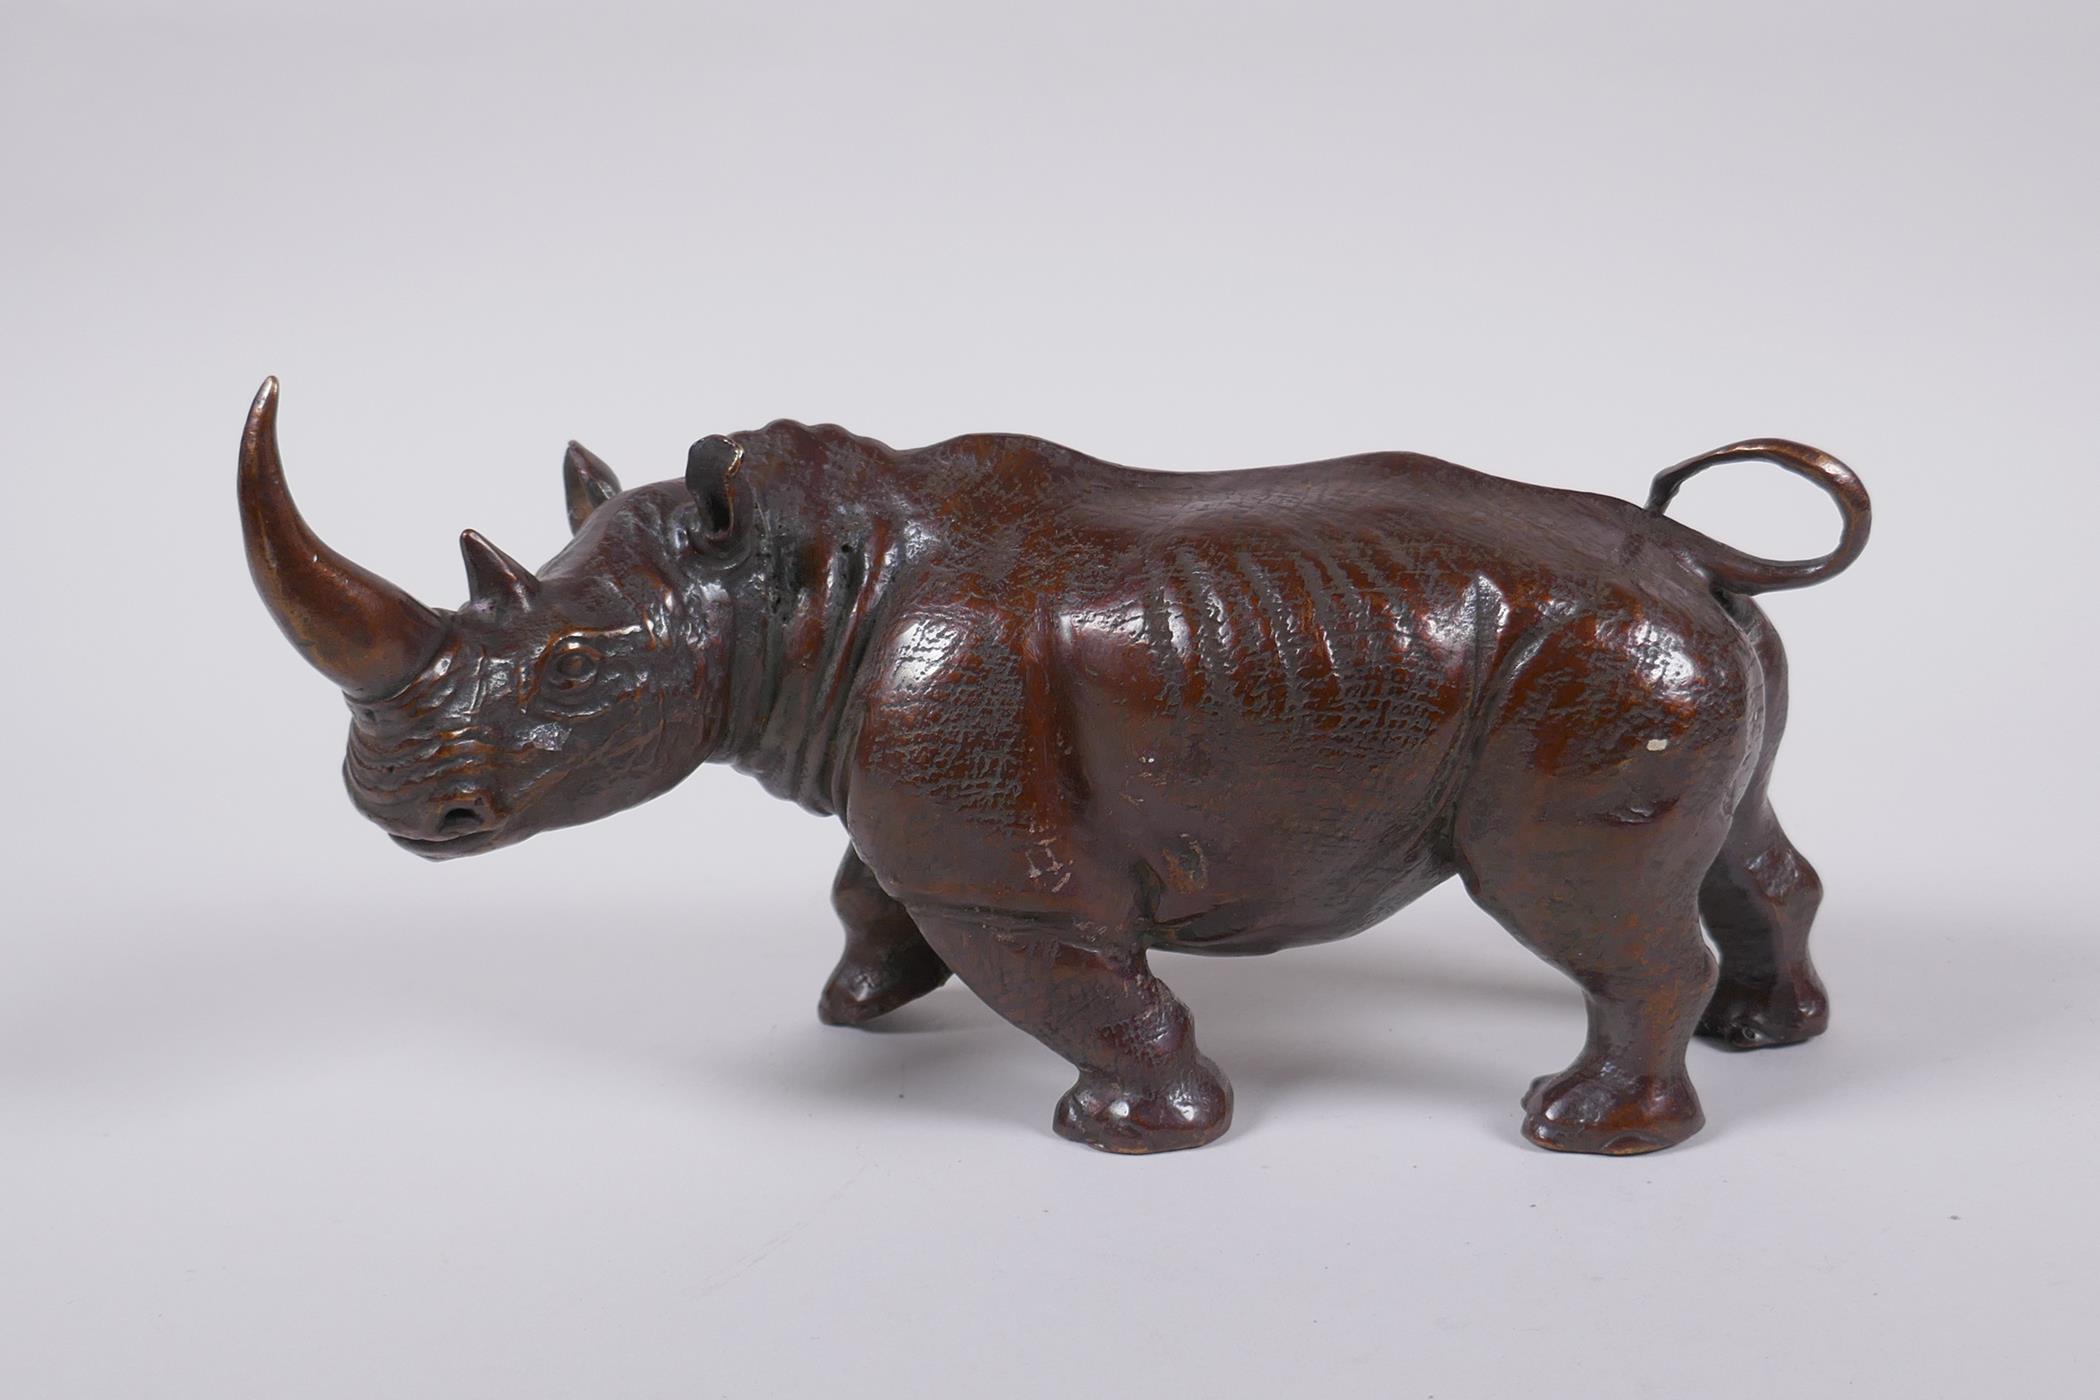 A filled bronze figure of a rhinoceros, 22cm long